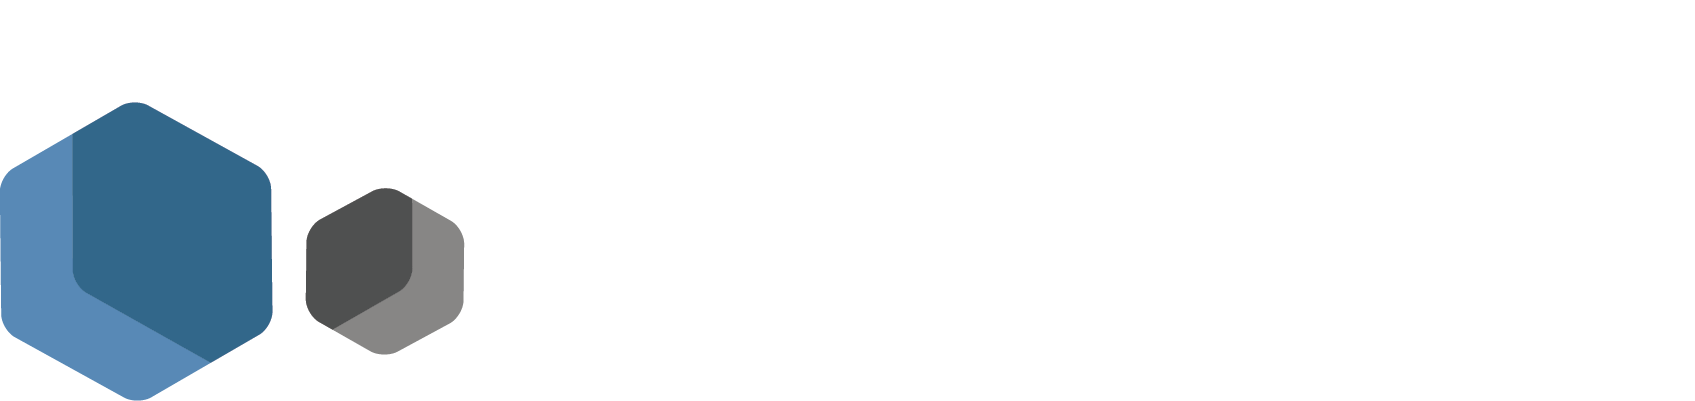 ALL-ALURA_A Valeo Networks_Horizontal-white text